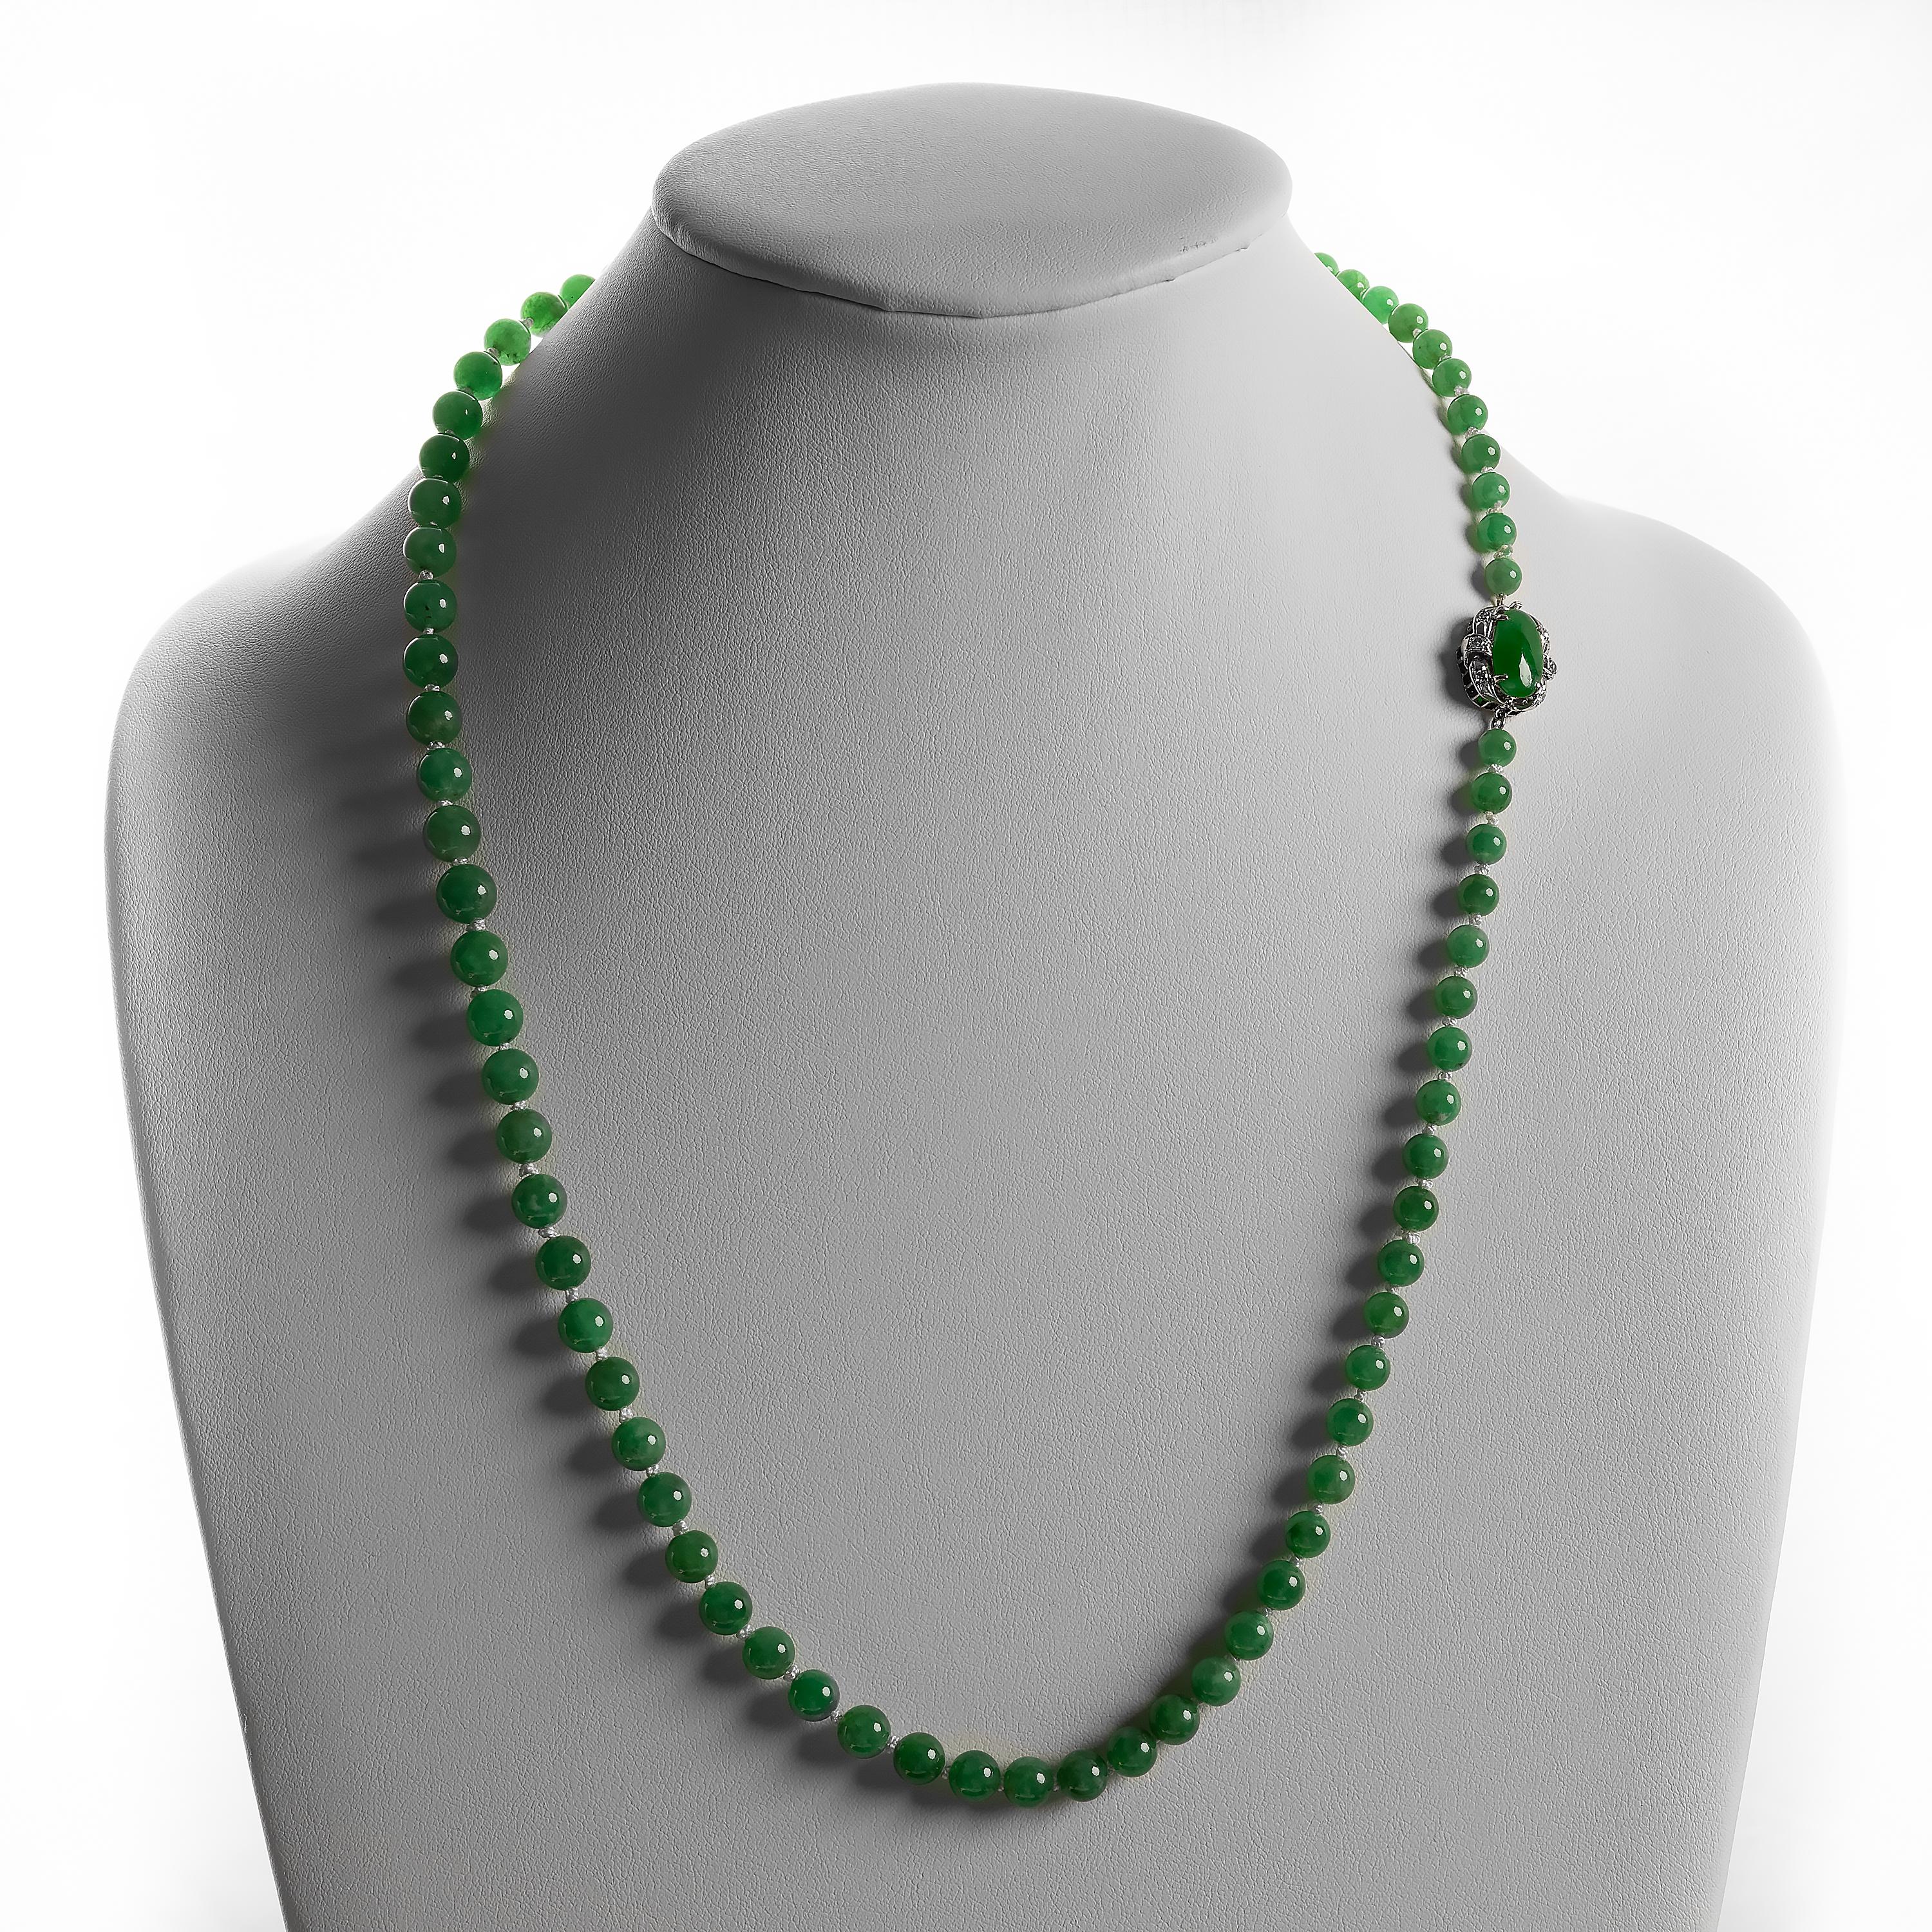 5mm   Certified Natural Untreated Light Green Jadeite Jade Round Beads Necklace 